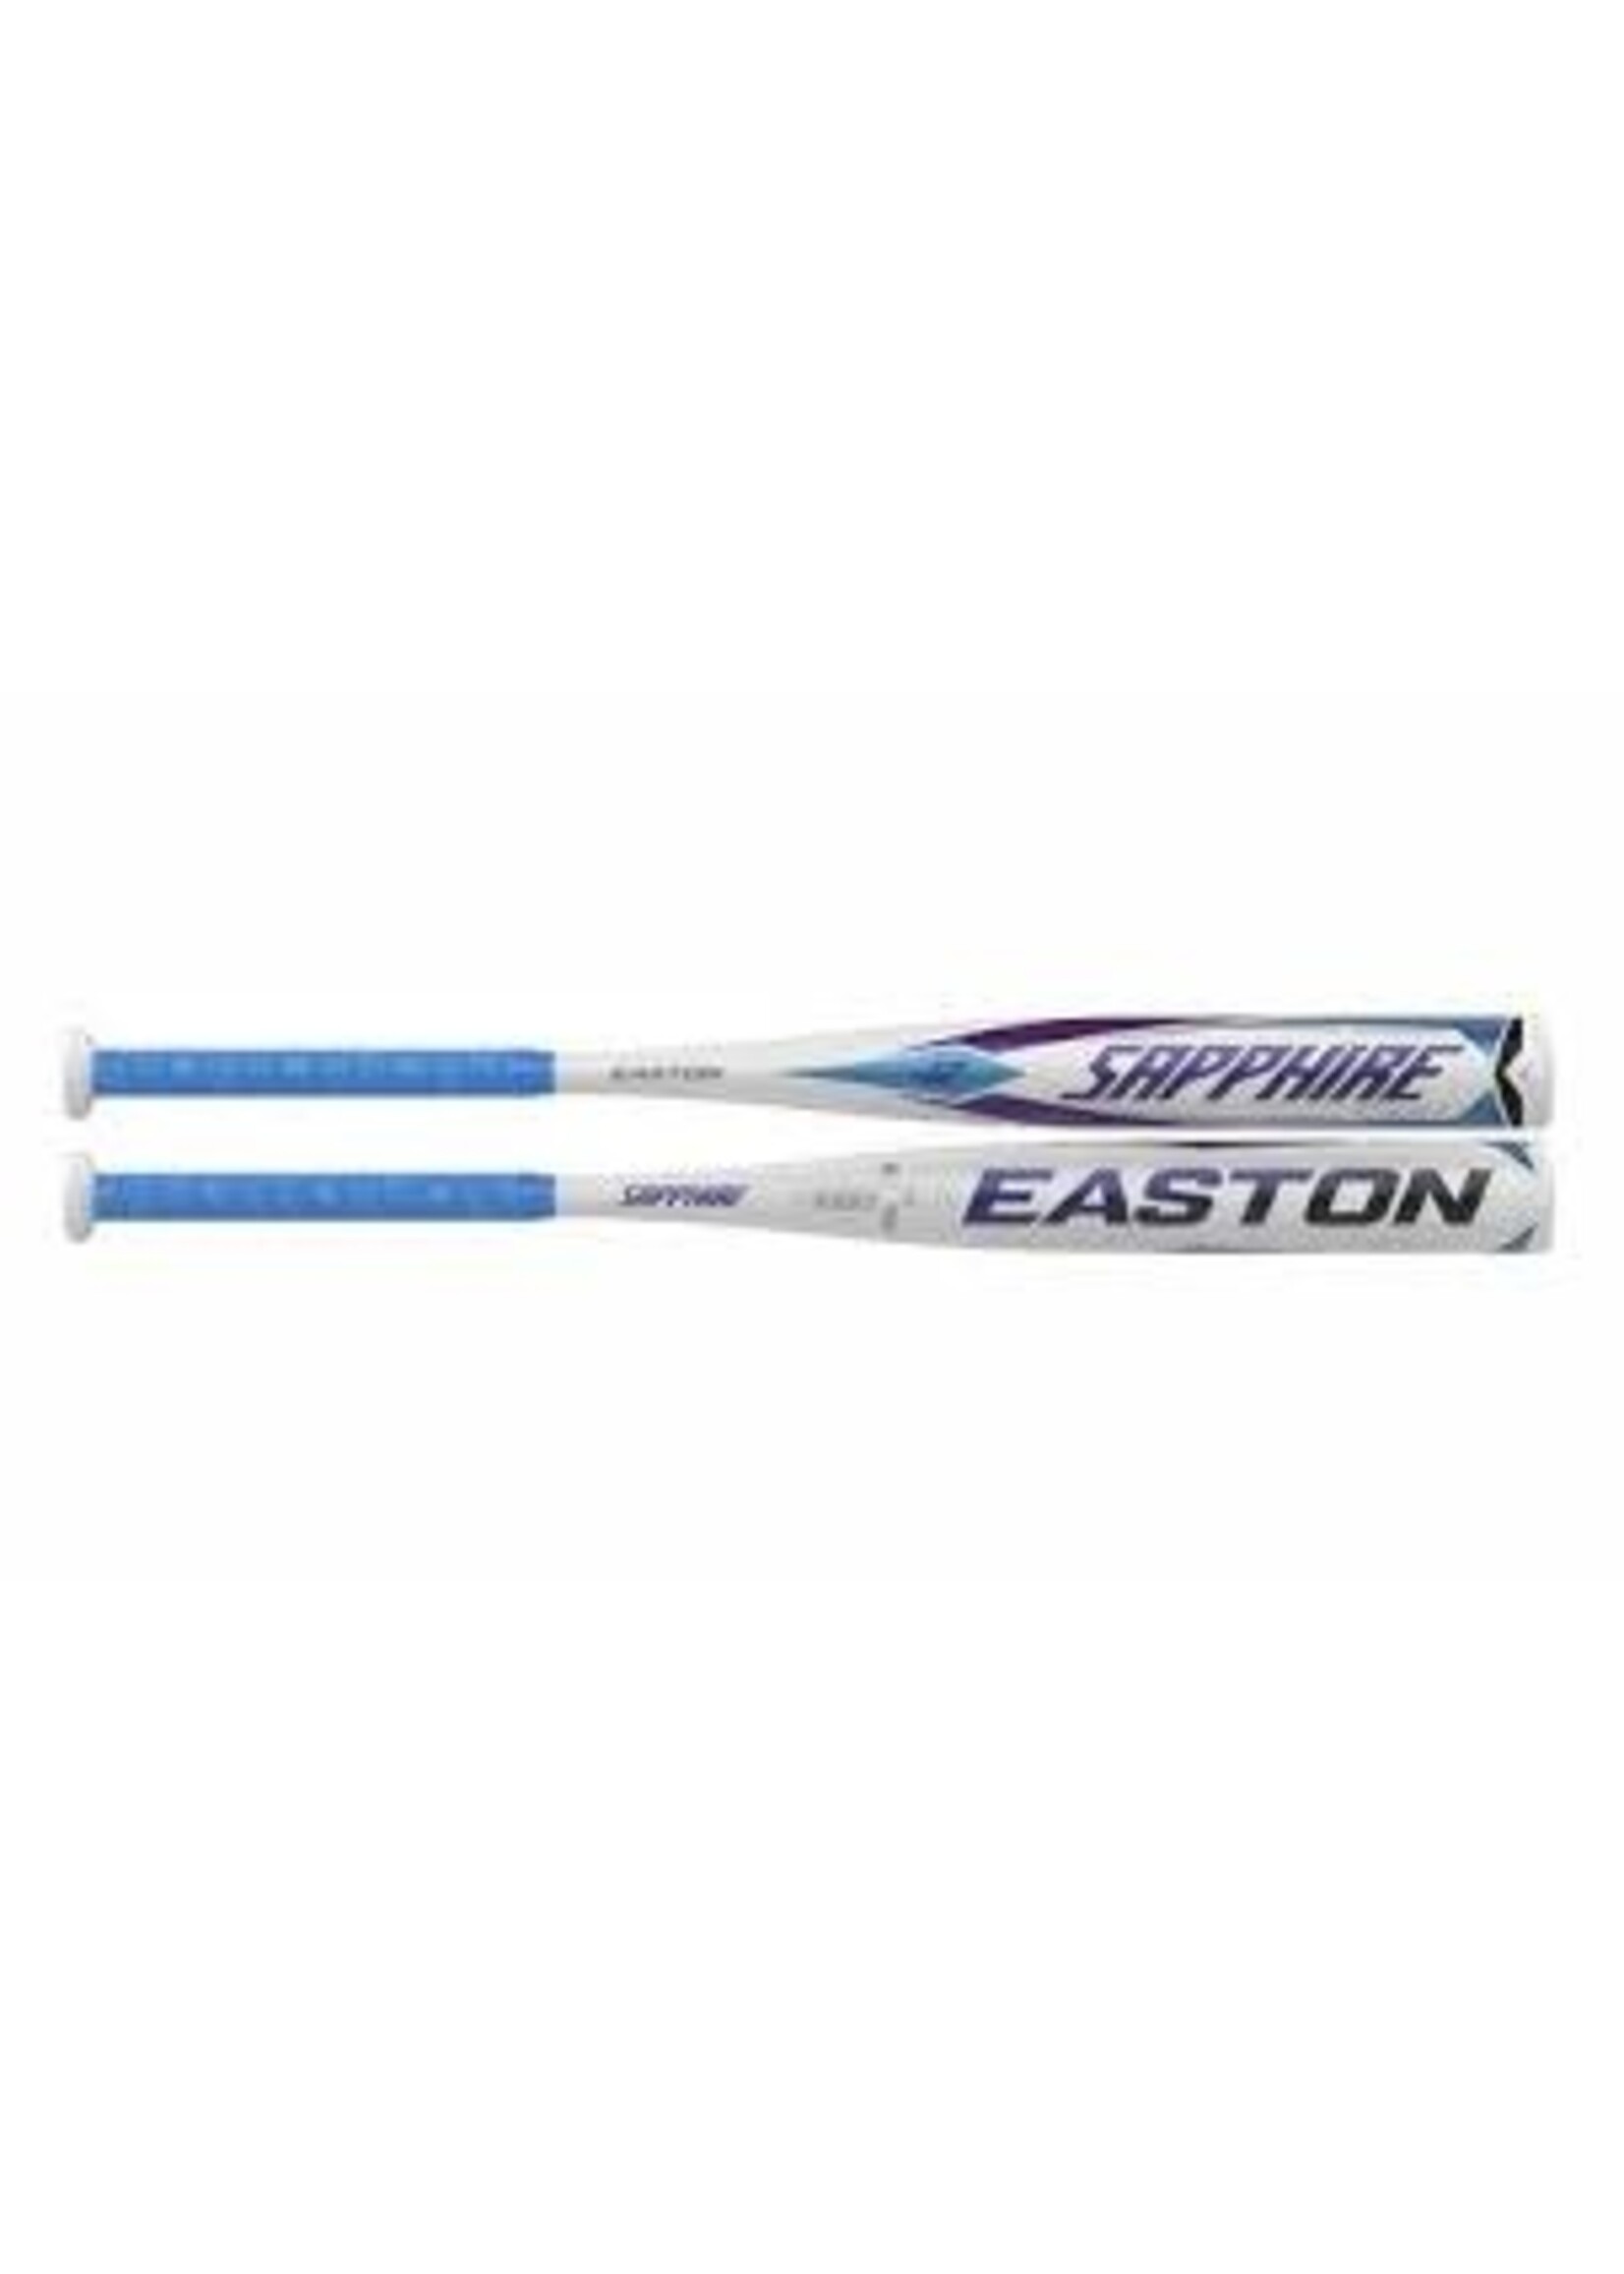 EASTON EASTON BAT FP22SAP SAPPHIRE -12